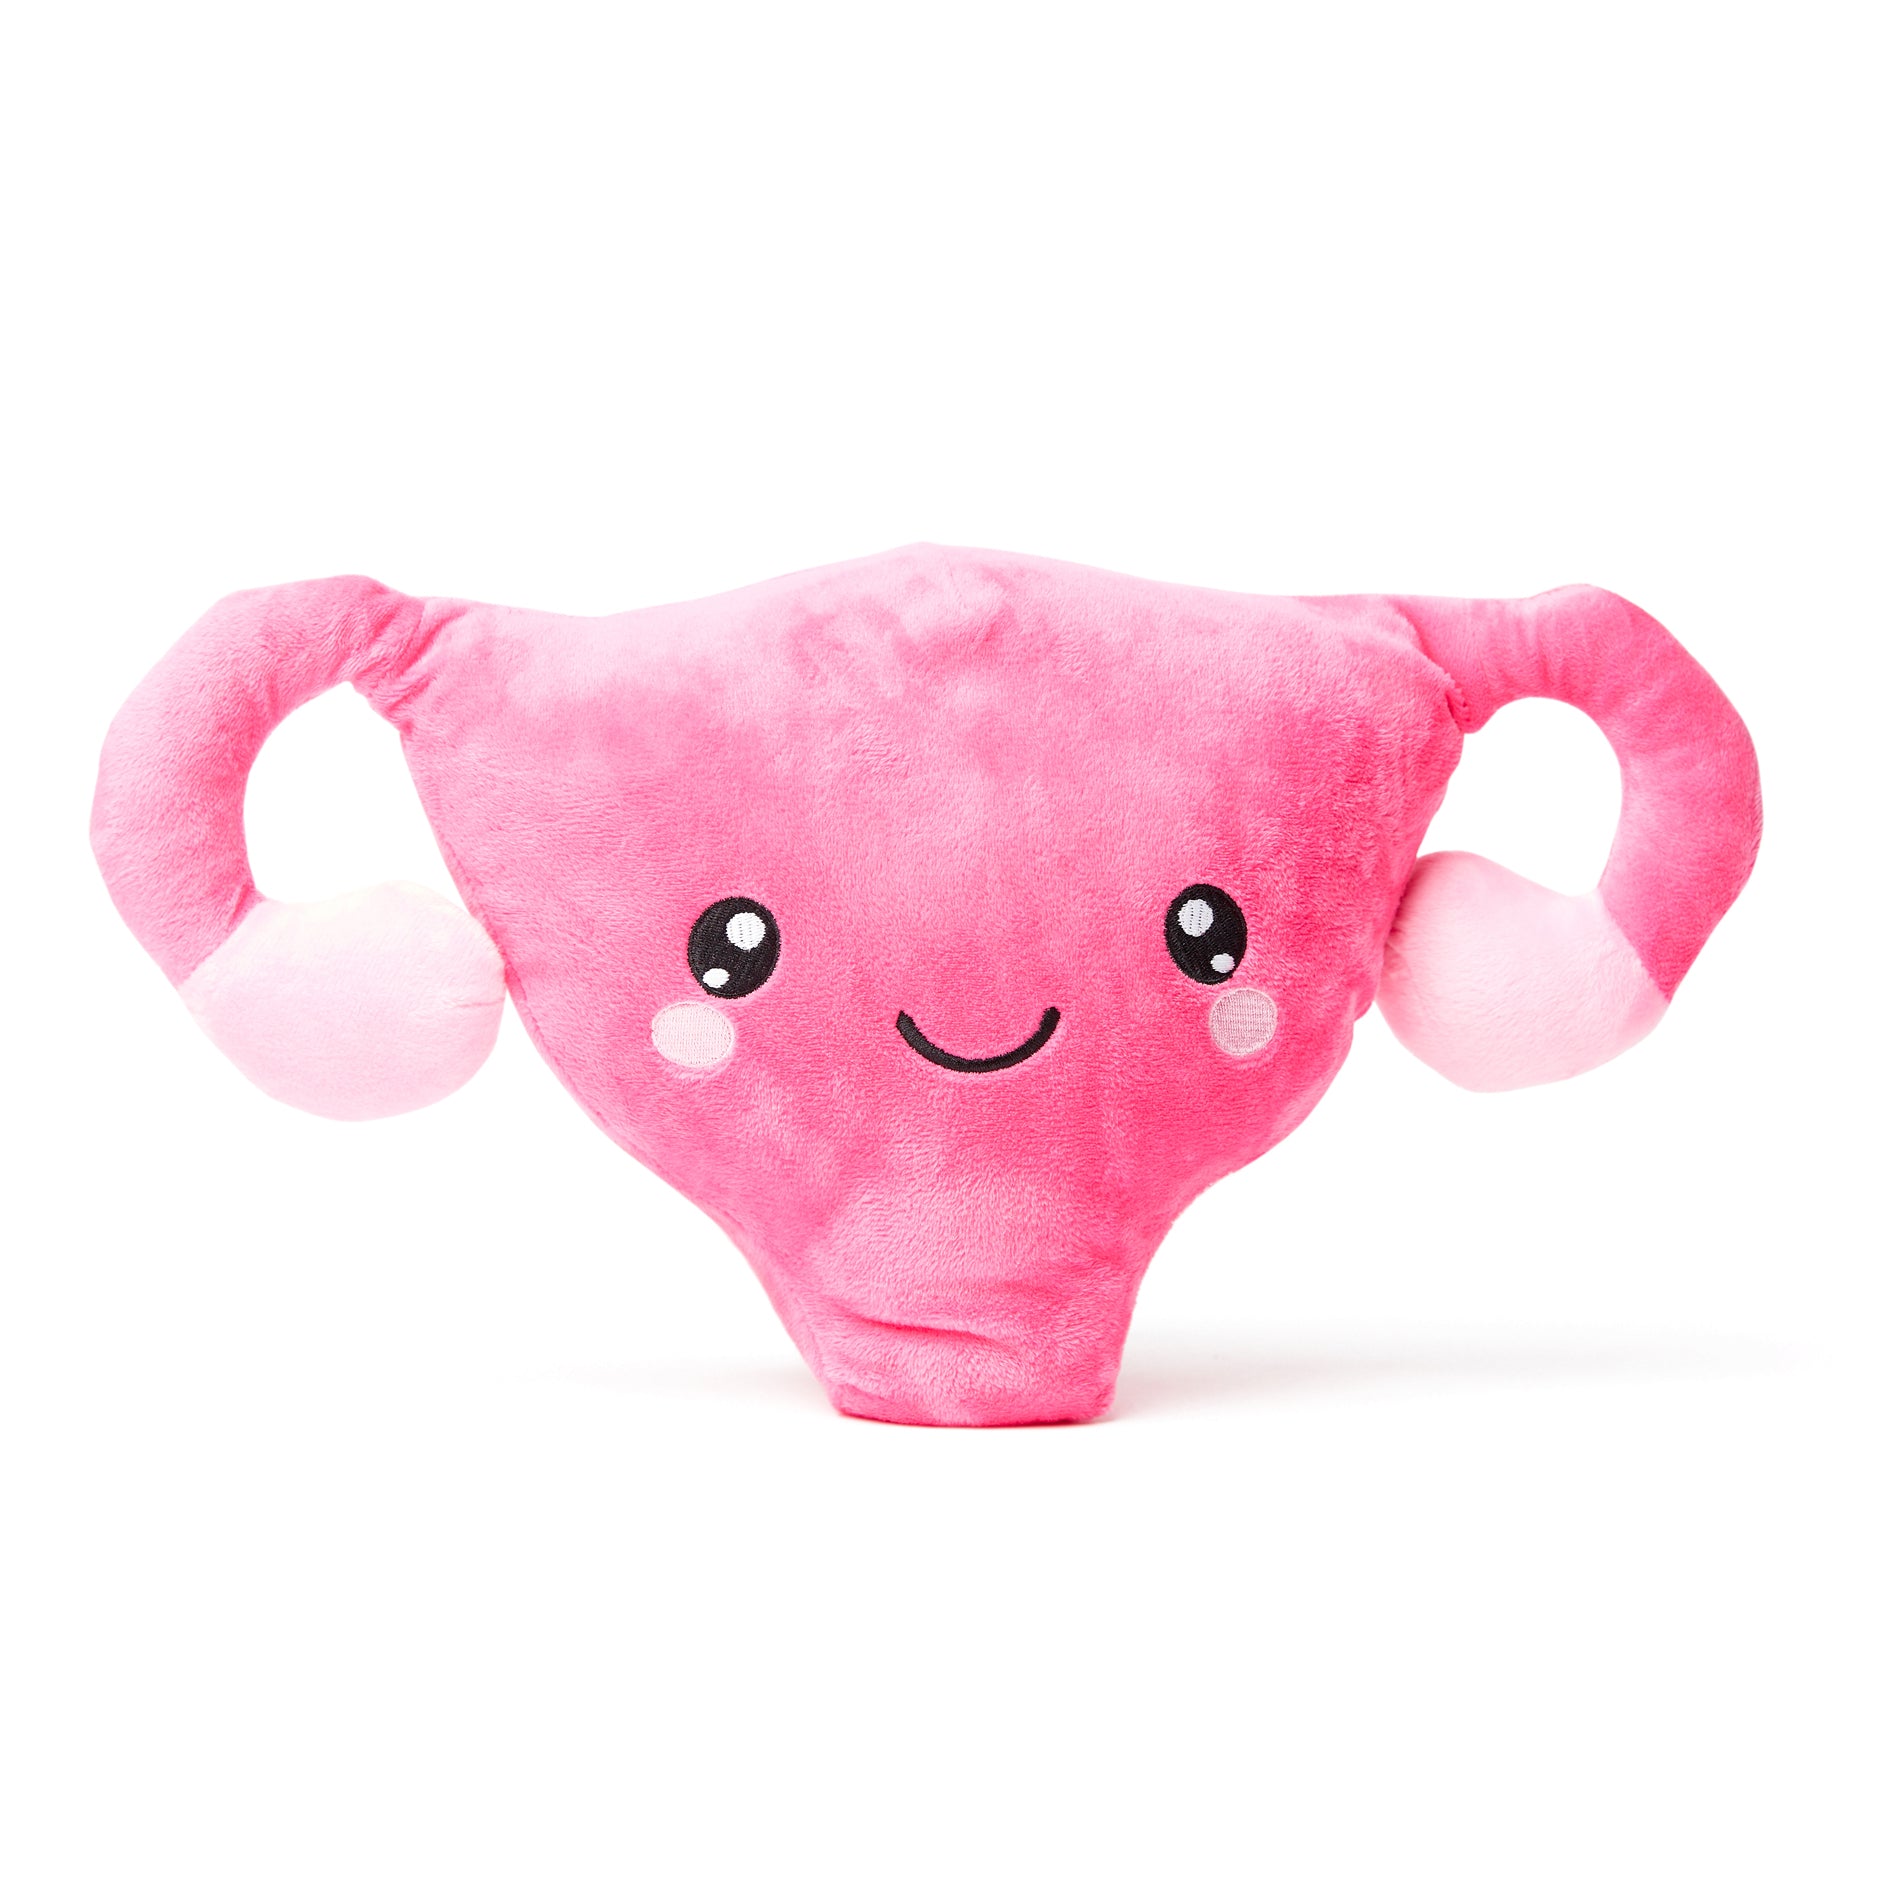 Nerdbugs Uterus Plush - Who Put The Cuter-us in Uterus?- Get Well Gift/ Hysterectomy/ Endometriosis/ Gynecologist Education/